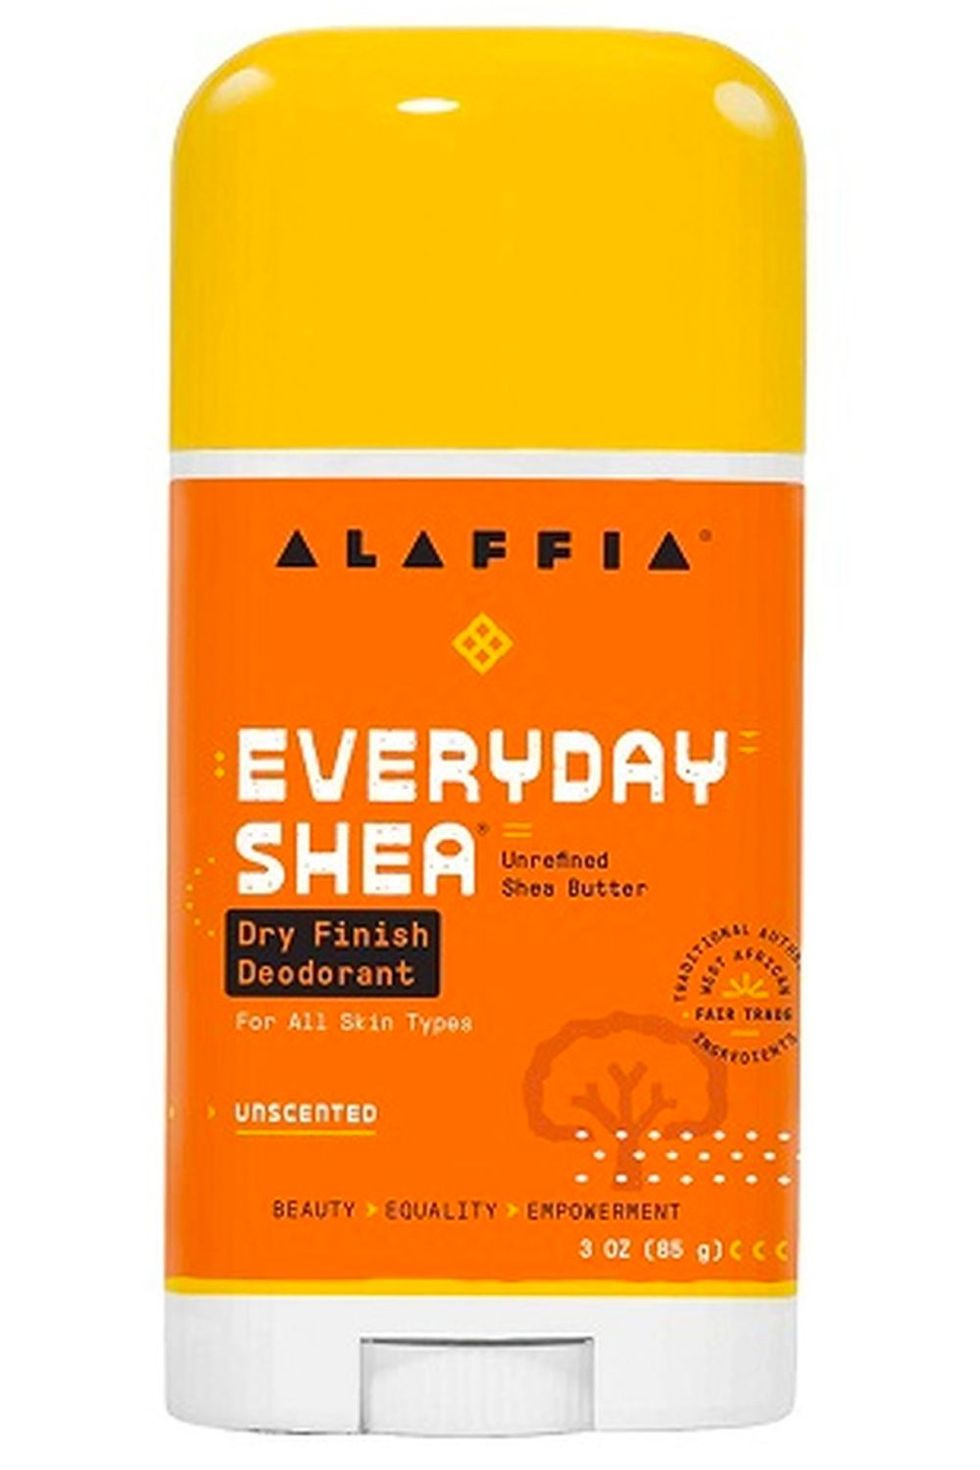 Alaffia EveryDay Shea Dry Finish Deodorant Unscented